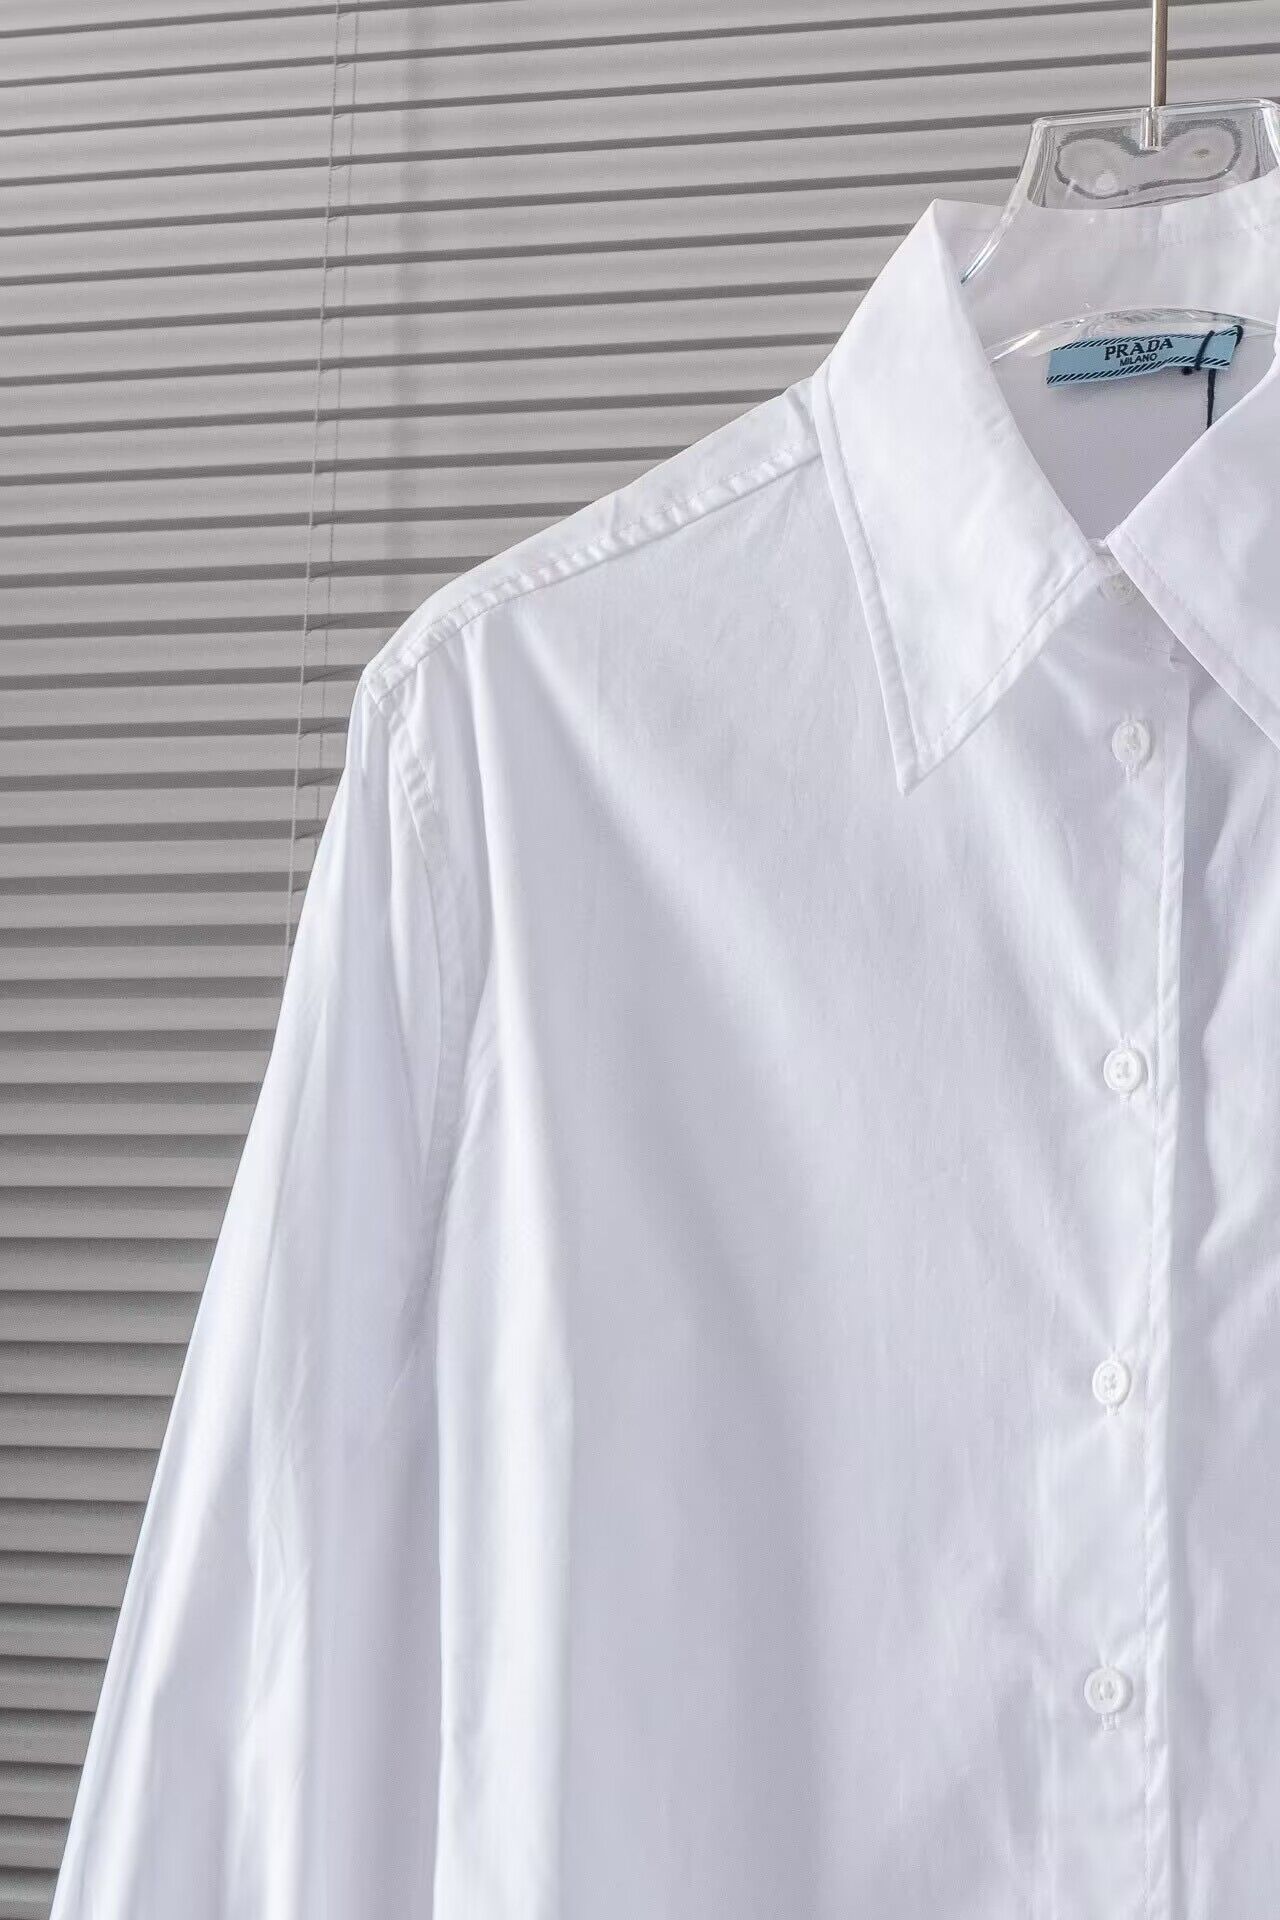 Prada T-Shirt PD39483 White